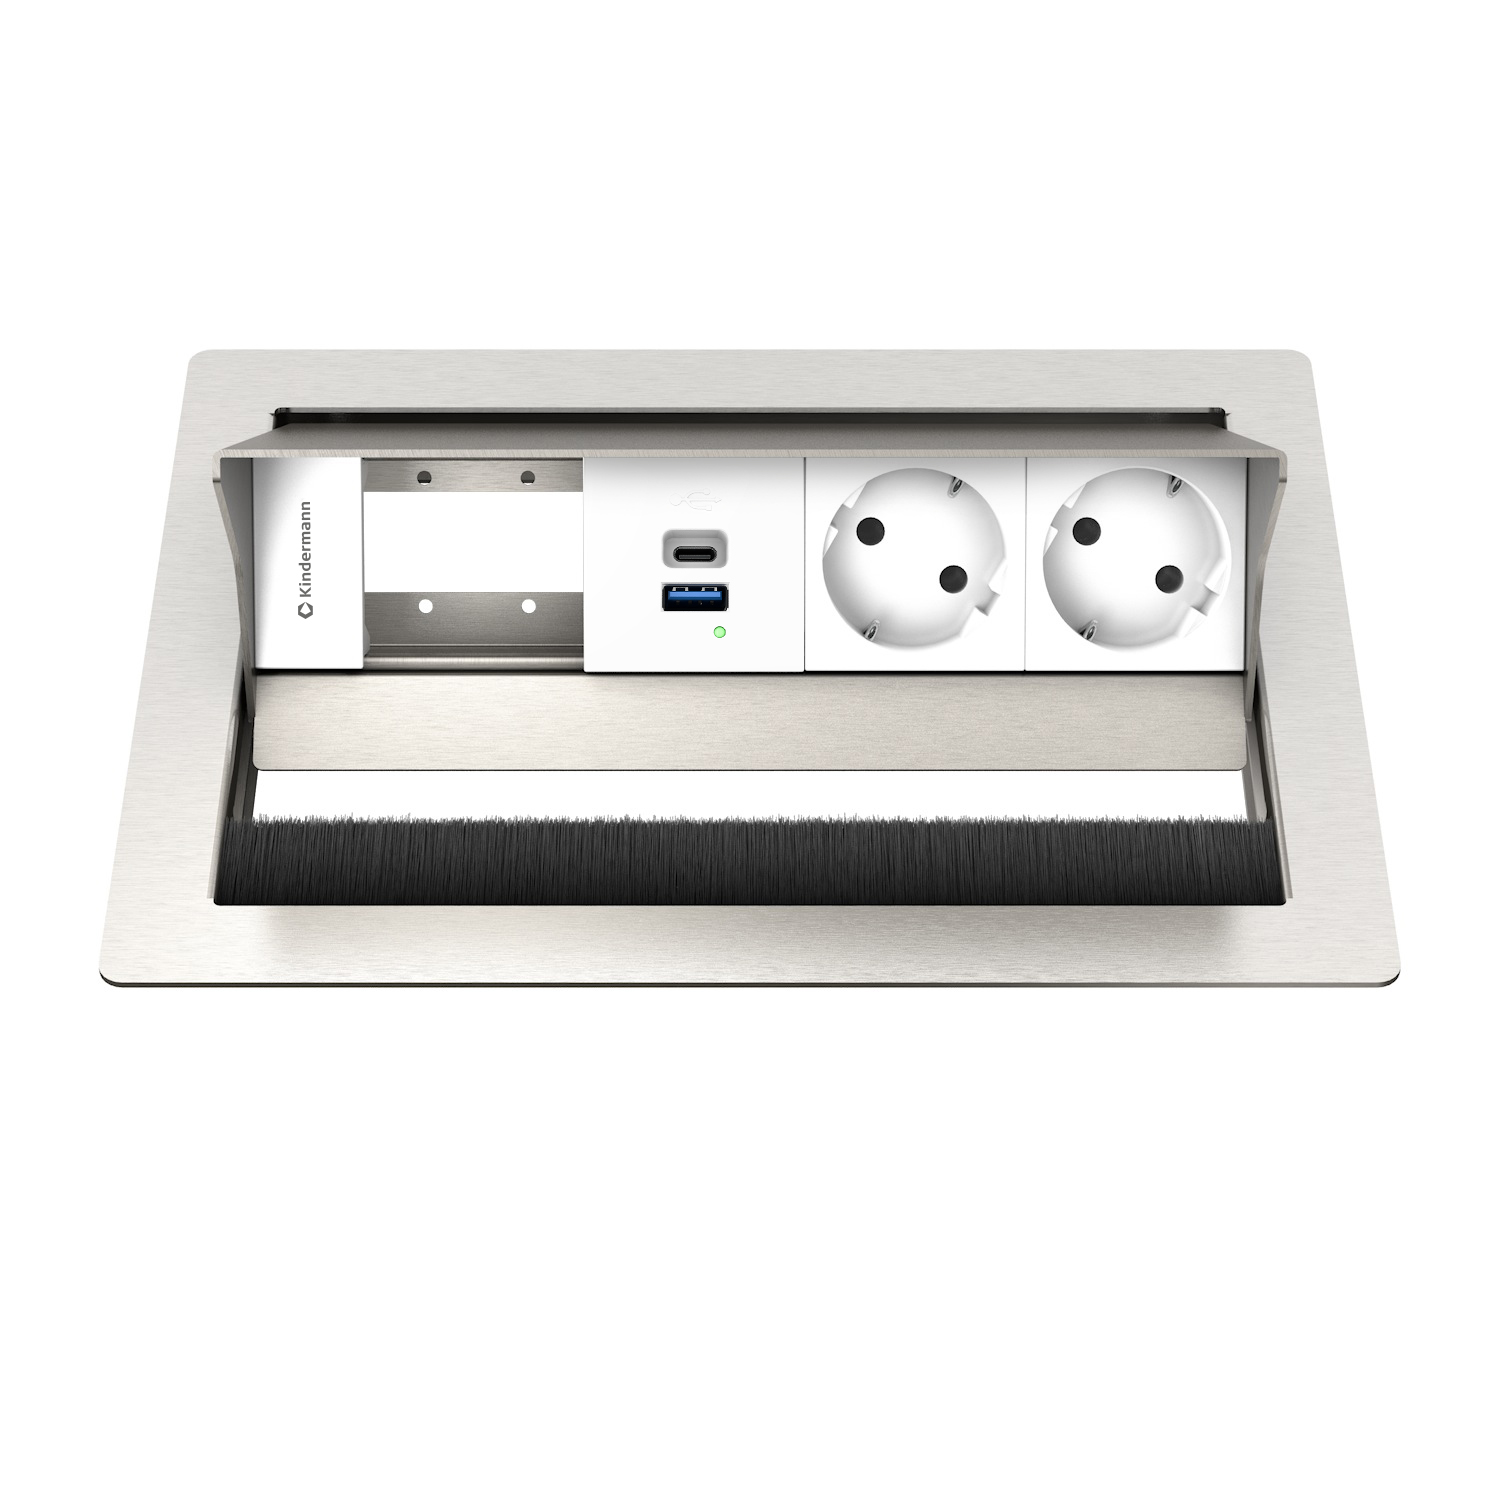 Kindermann Cableport Standard² 4-way 2x power - 1x USB-A / 1x USB-C - desktop housing - stainless steel